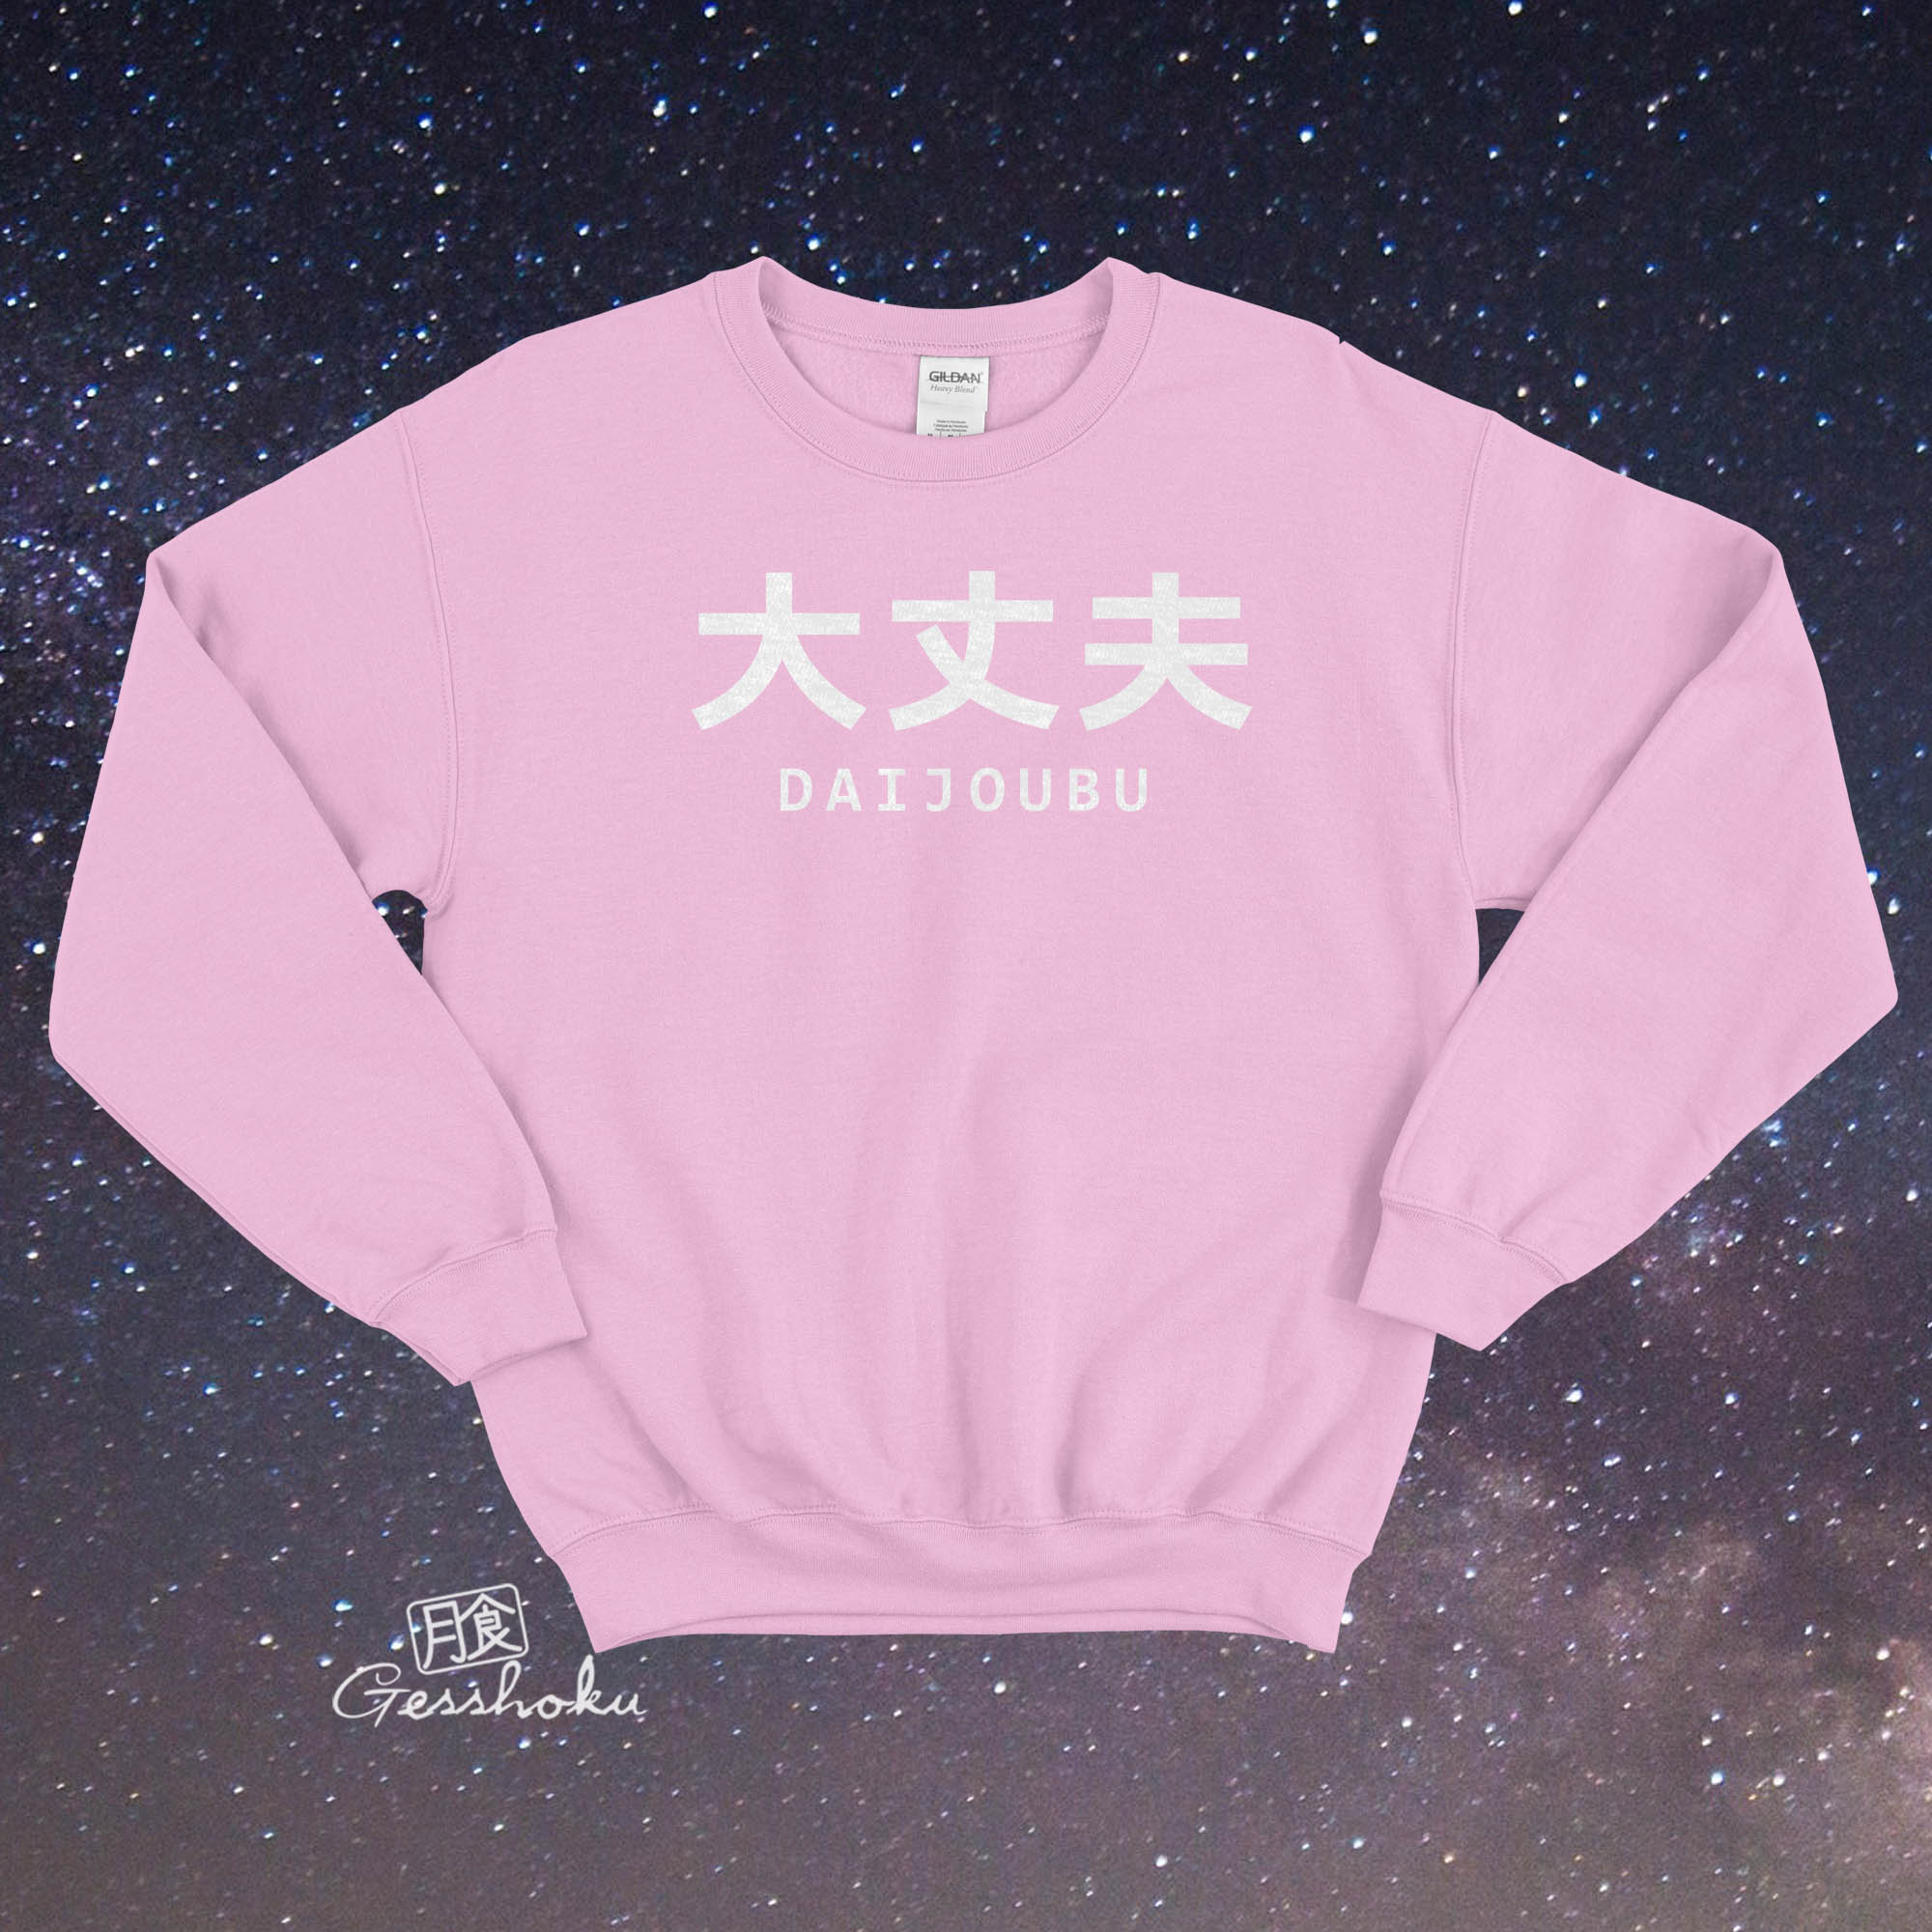 Daijoubu "It's Okay" Crewneck Sweatshirt - Light Pink